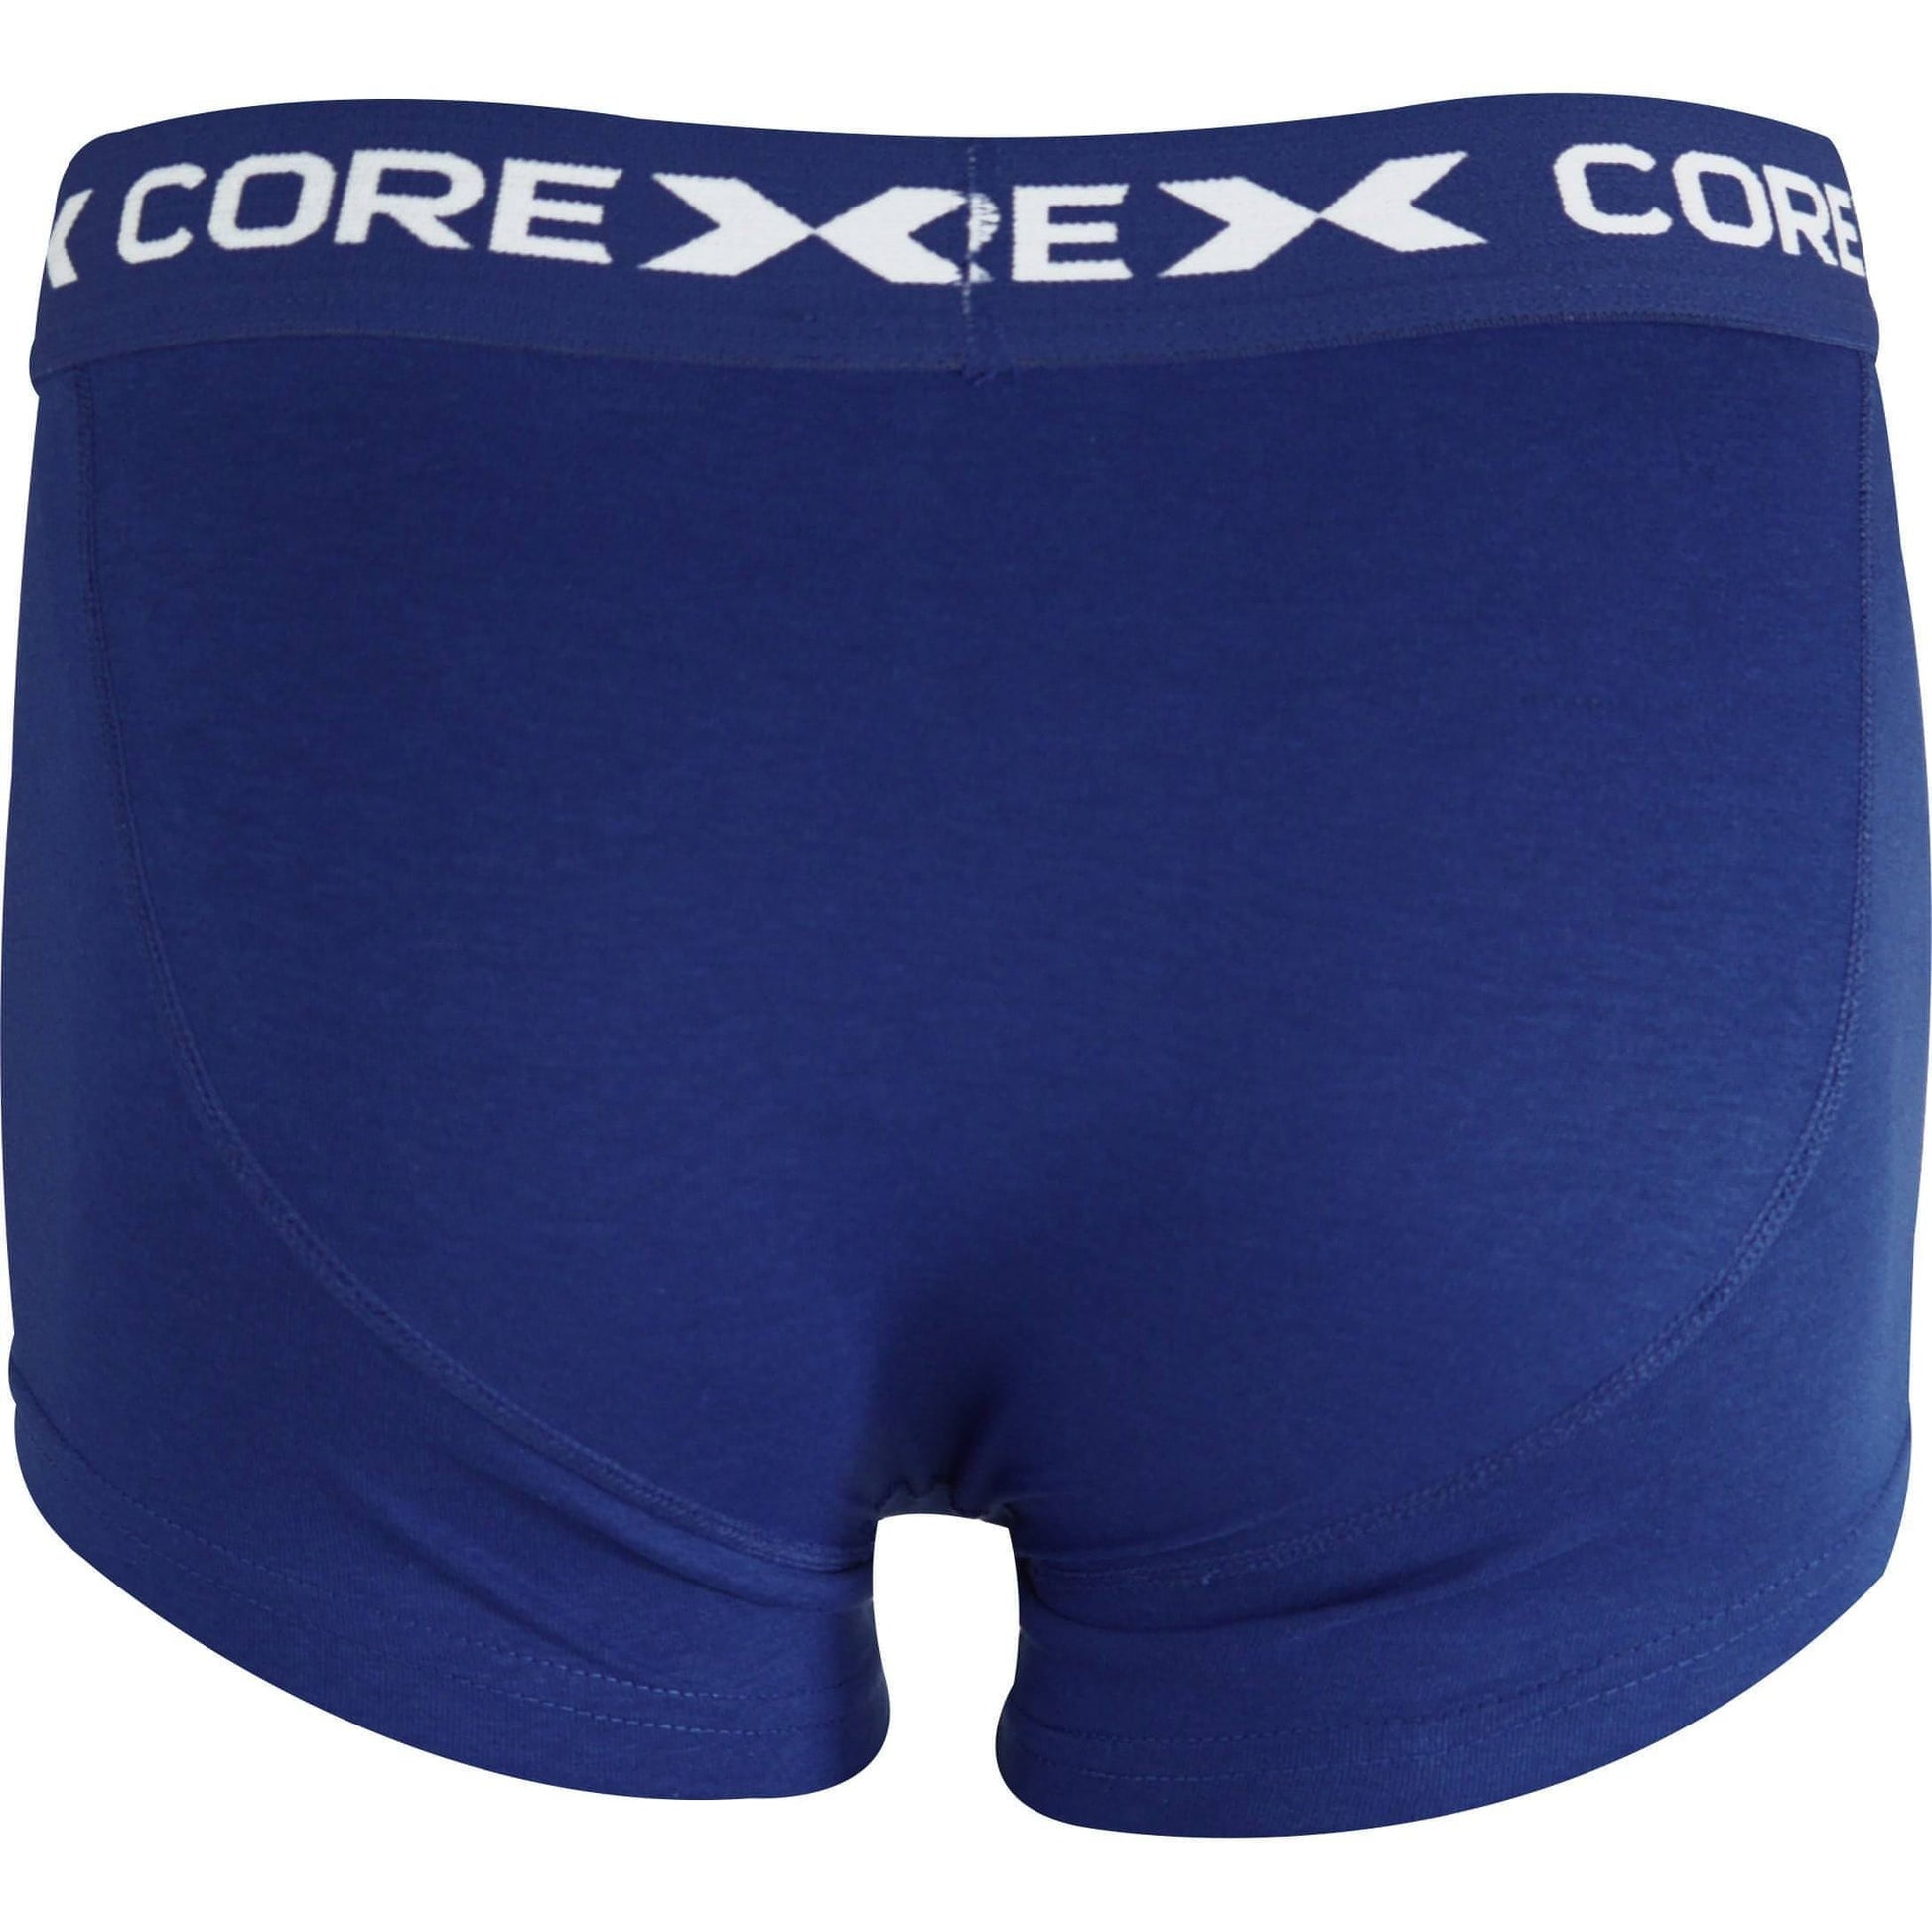 Corex Fitness Classic Pack Boxers 1P204931Wm Royalgrey Royal Back View